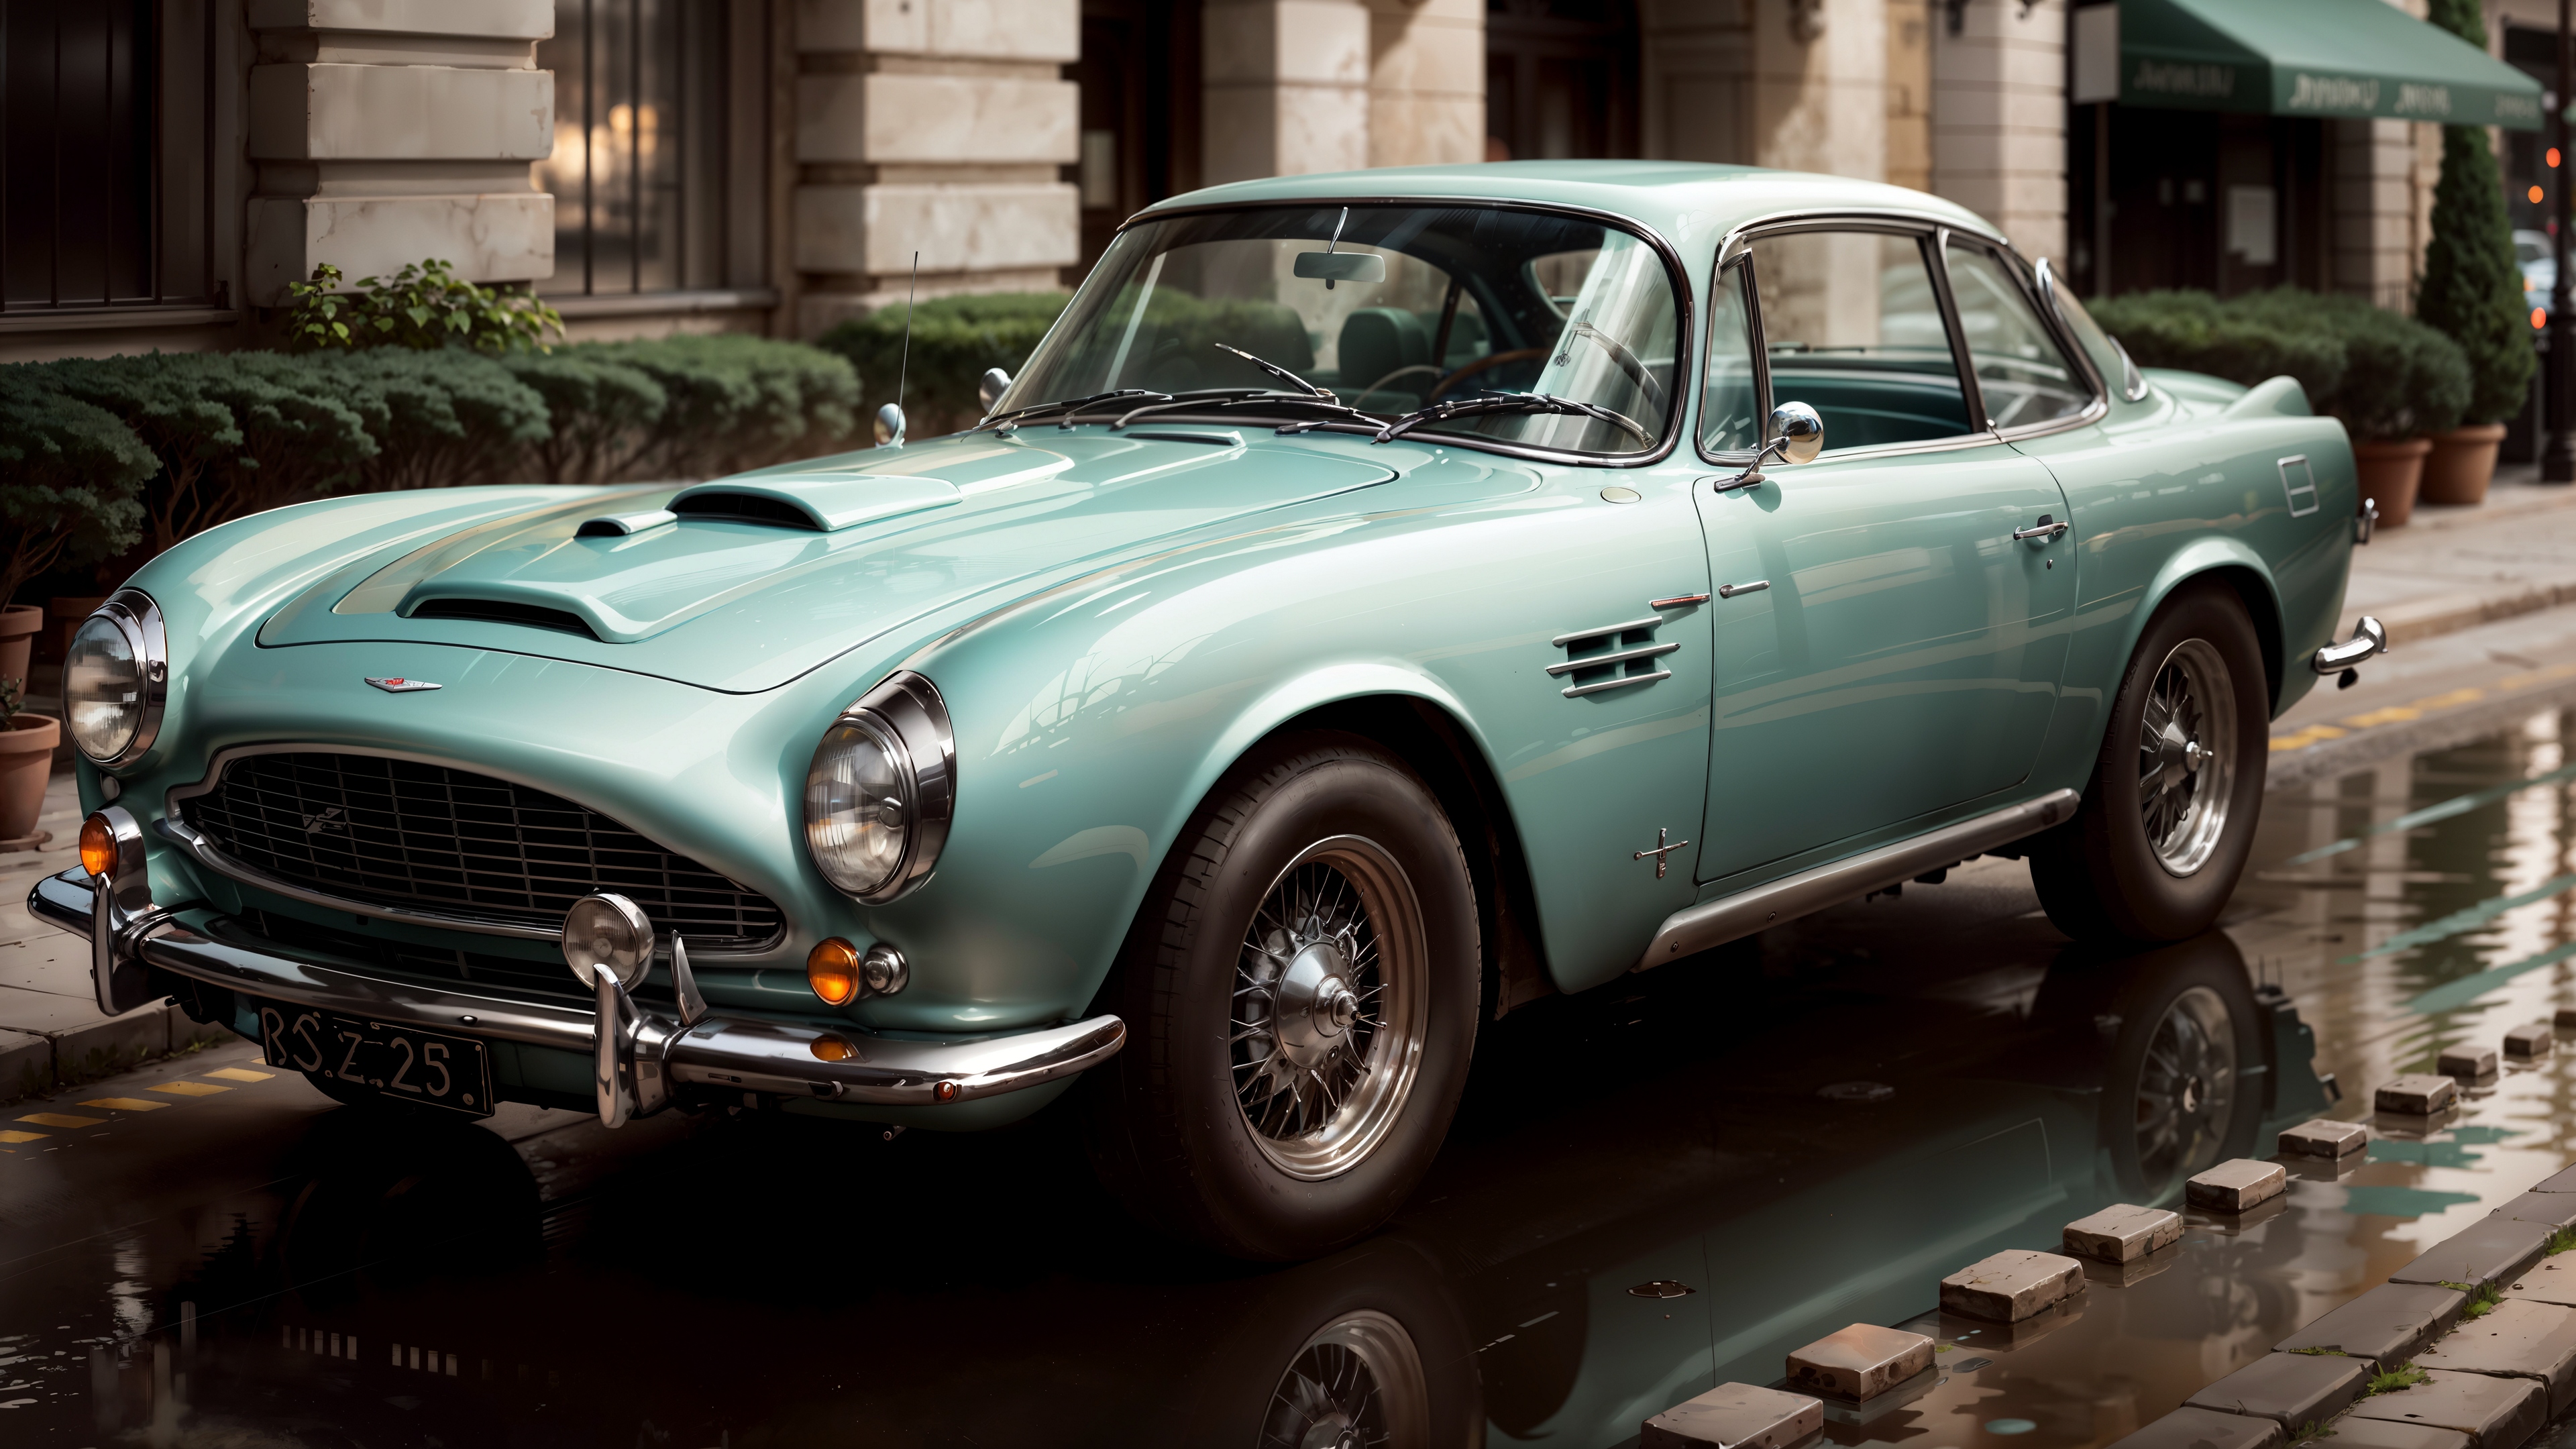 Free photo A vintage Aston Martin like James Bond.